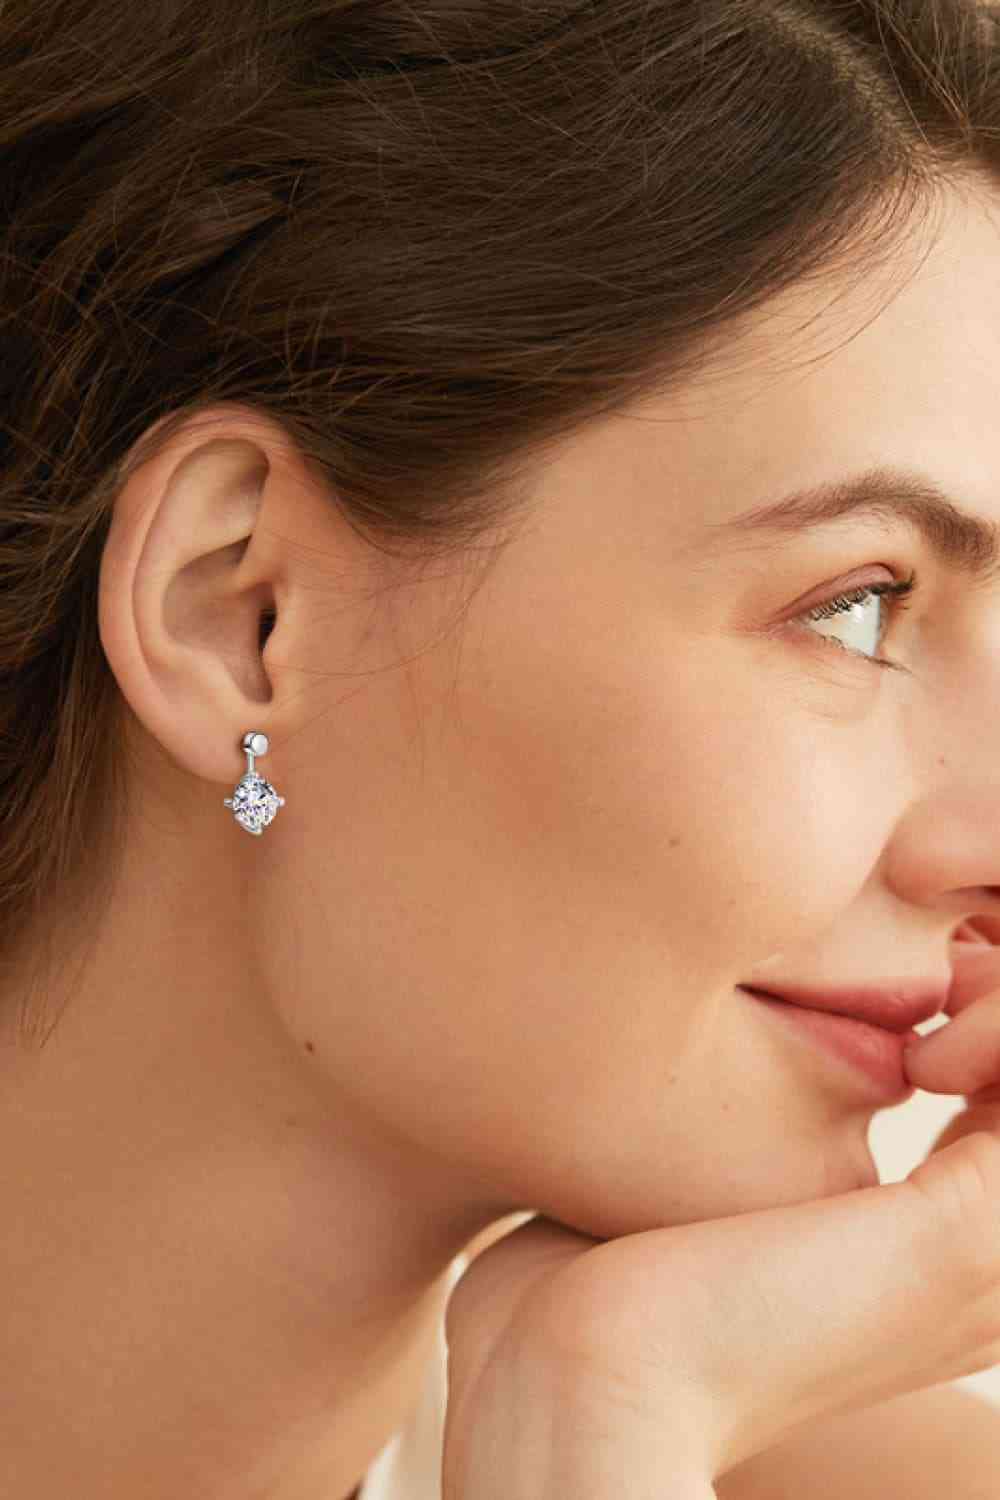 Adored 4 Carat Moissanite Drop Earrings - Tophatter Deals